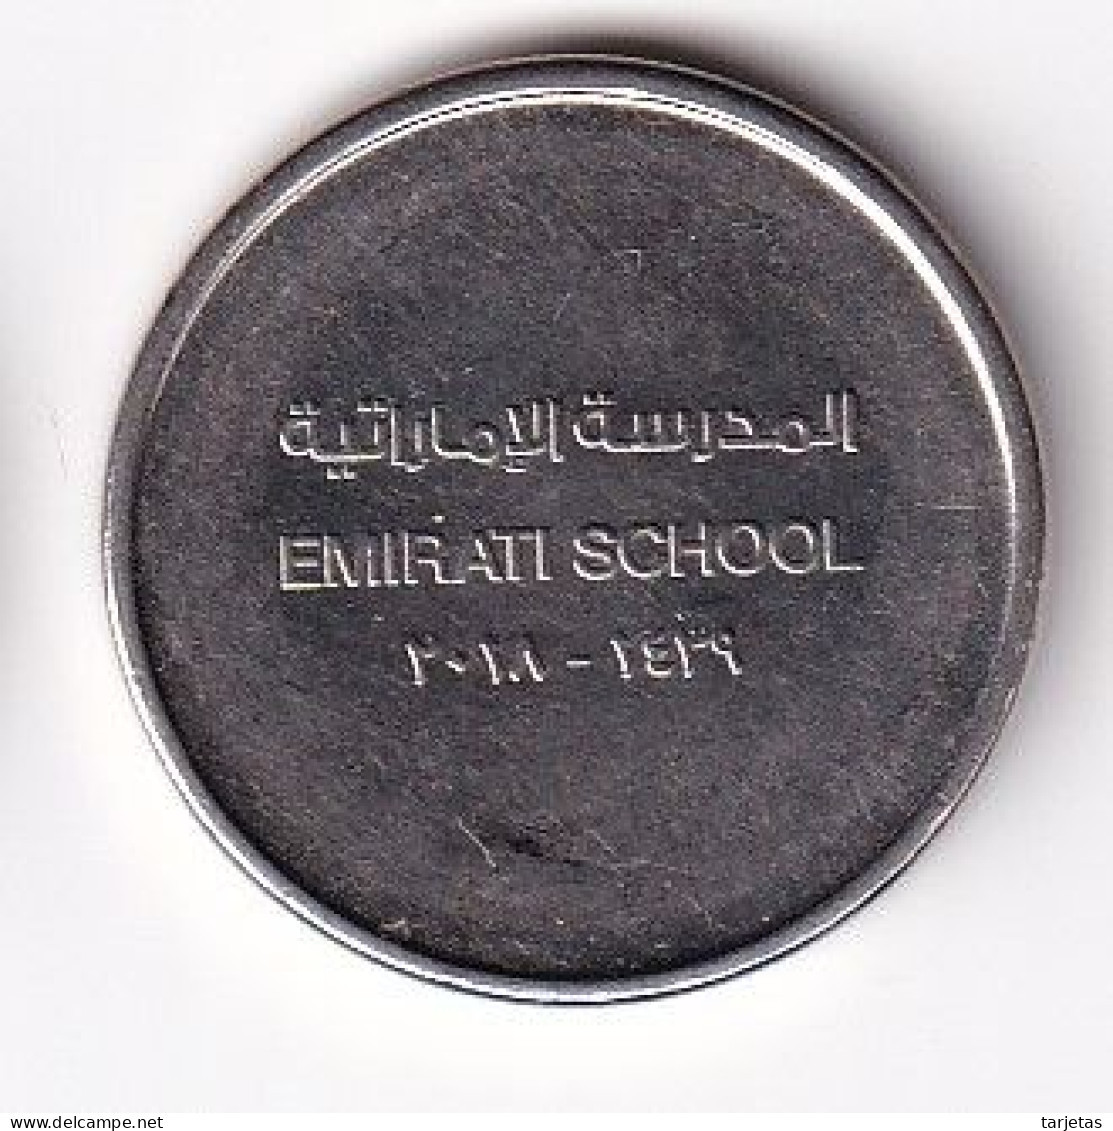 MONEDA DE EMIRATOS ARABES DE 1 DIRHAM DEL AÑO 2018 - EMIRATI SCHOOL (COIN) - Emirats Arabes Unis